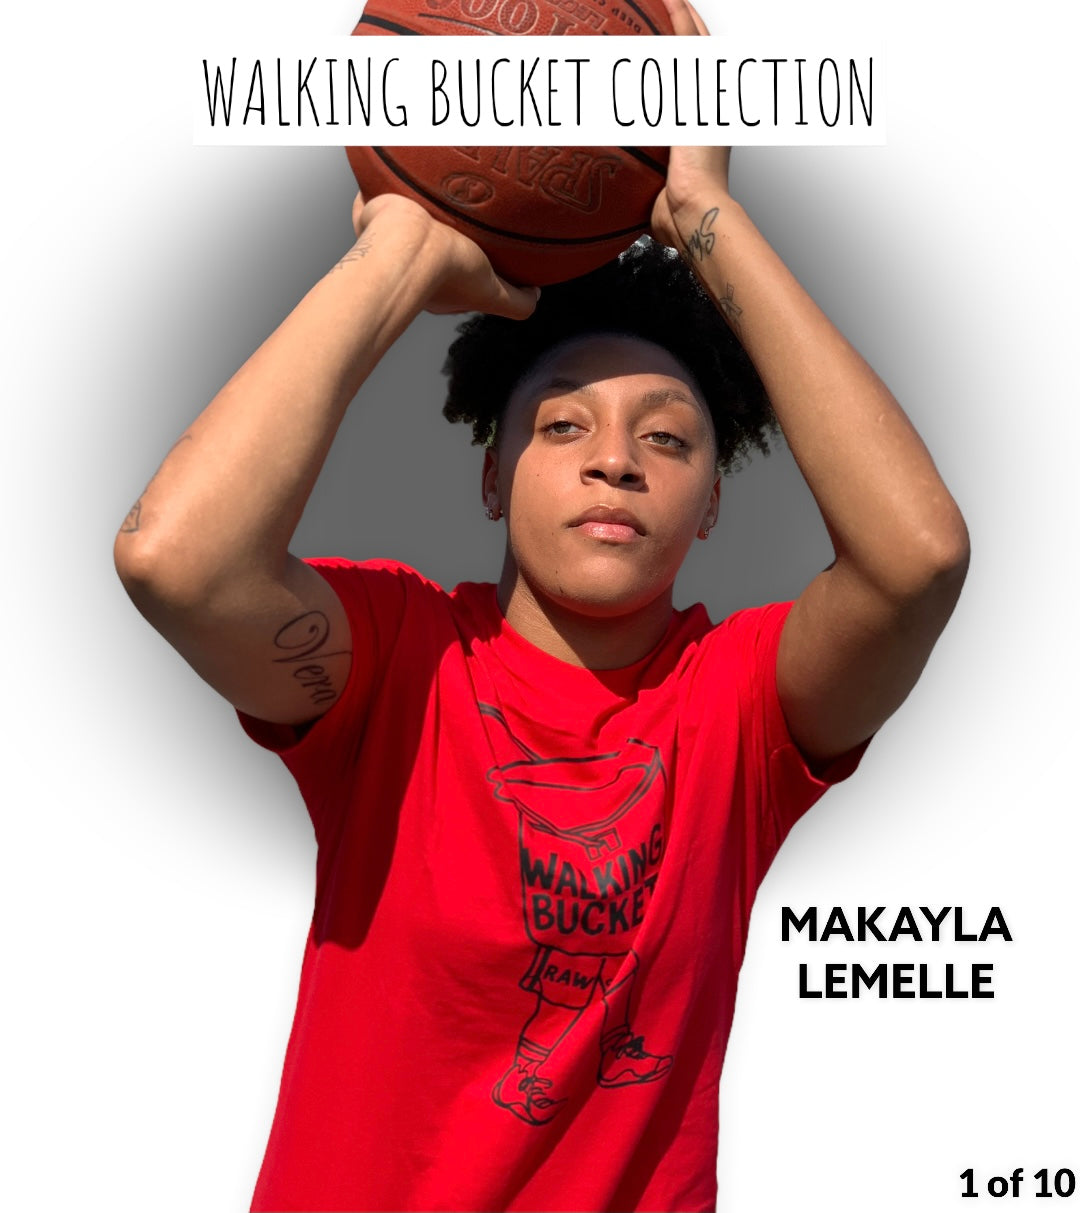 Walking Bucket Collection "THE ORIGINAL WALKING BUCKET" (Series 1 of 10) RED